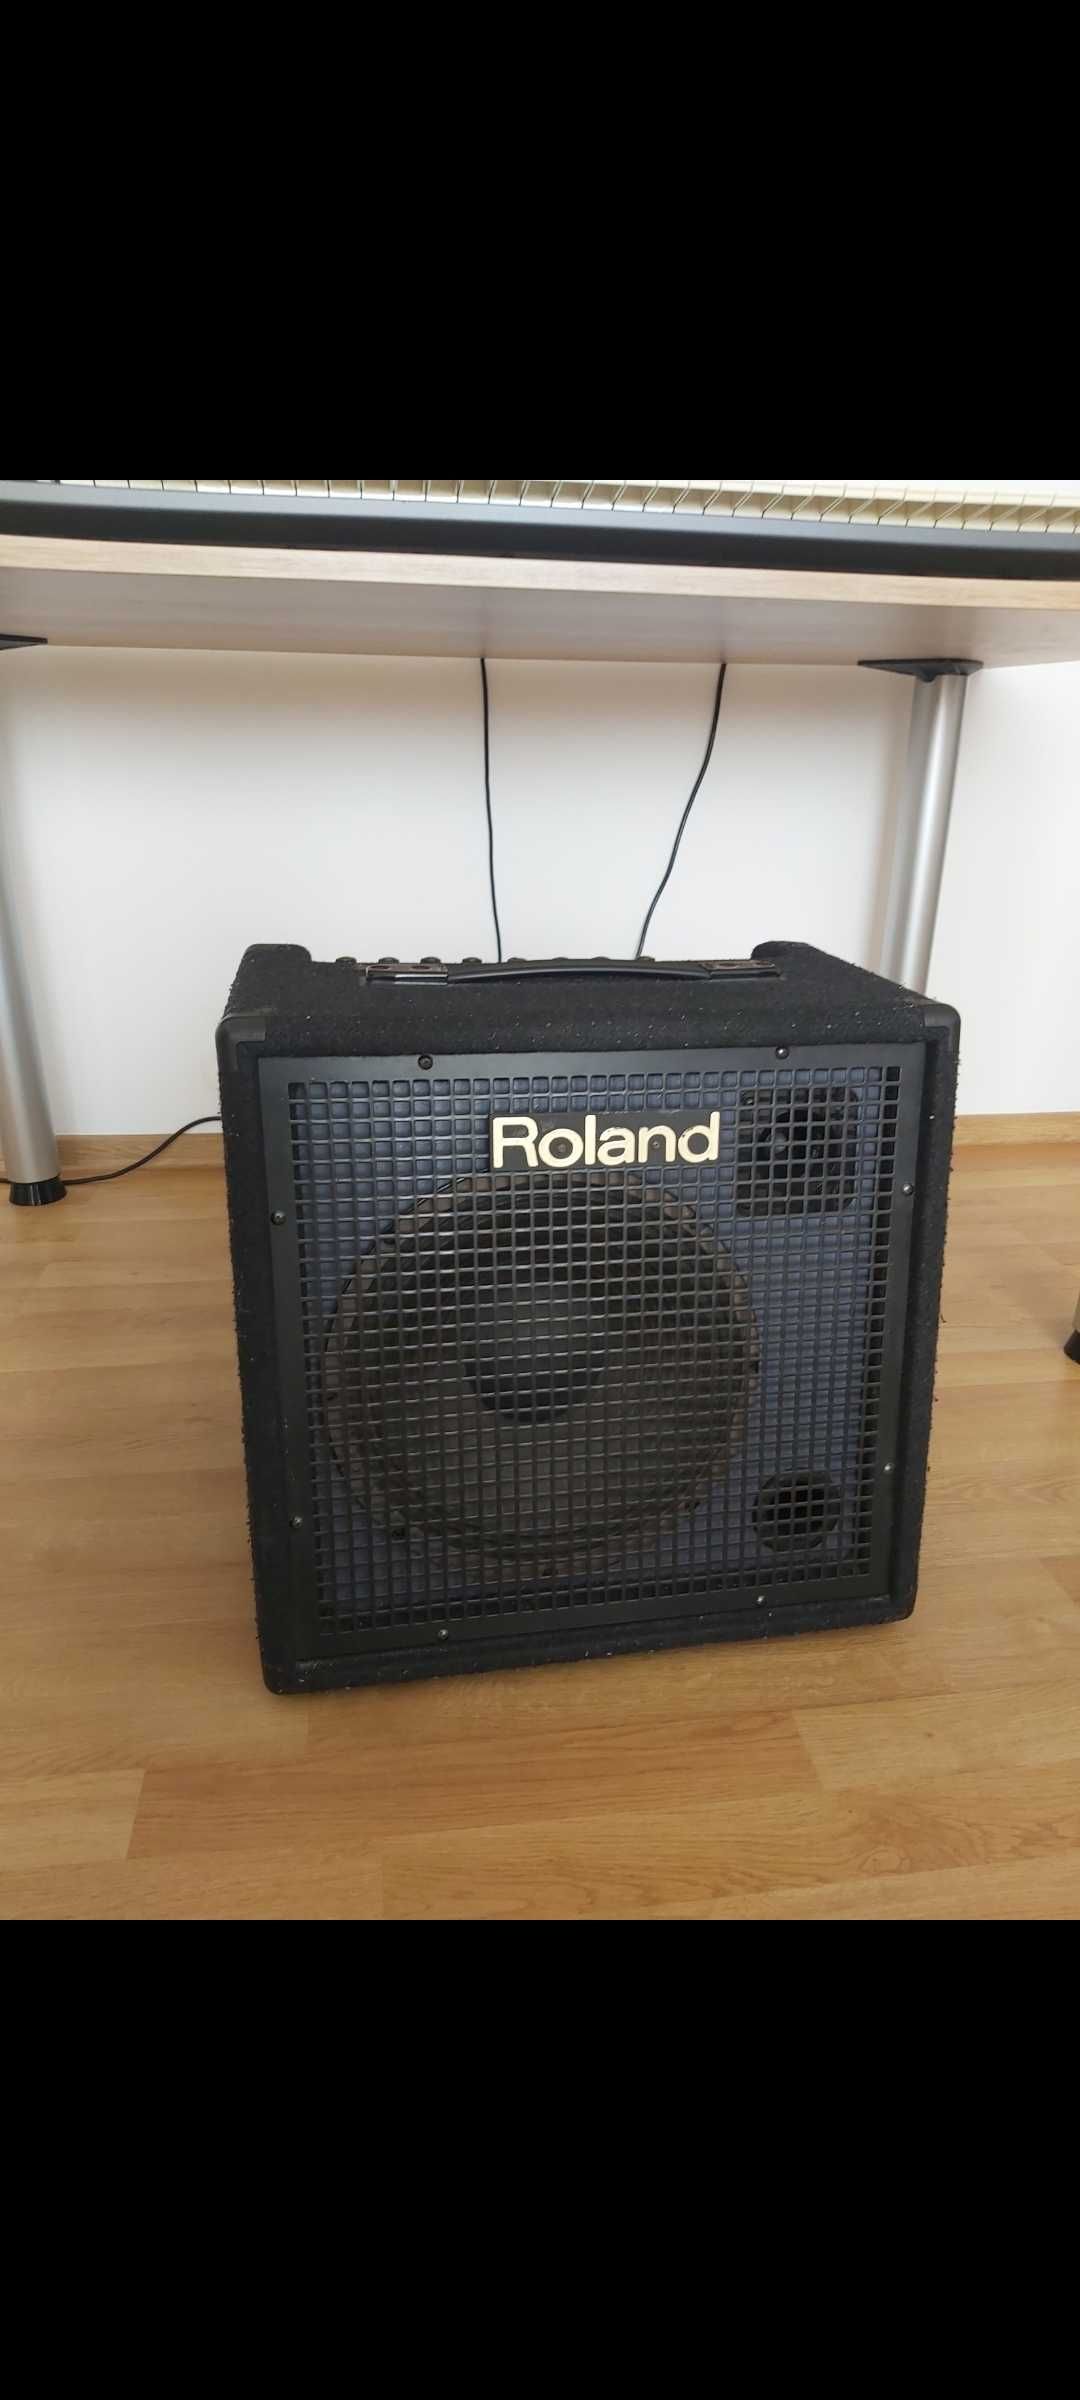 Vand orga Korg ix300 si statie Roland/Amplificator KC 300